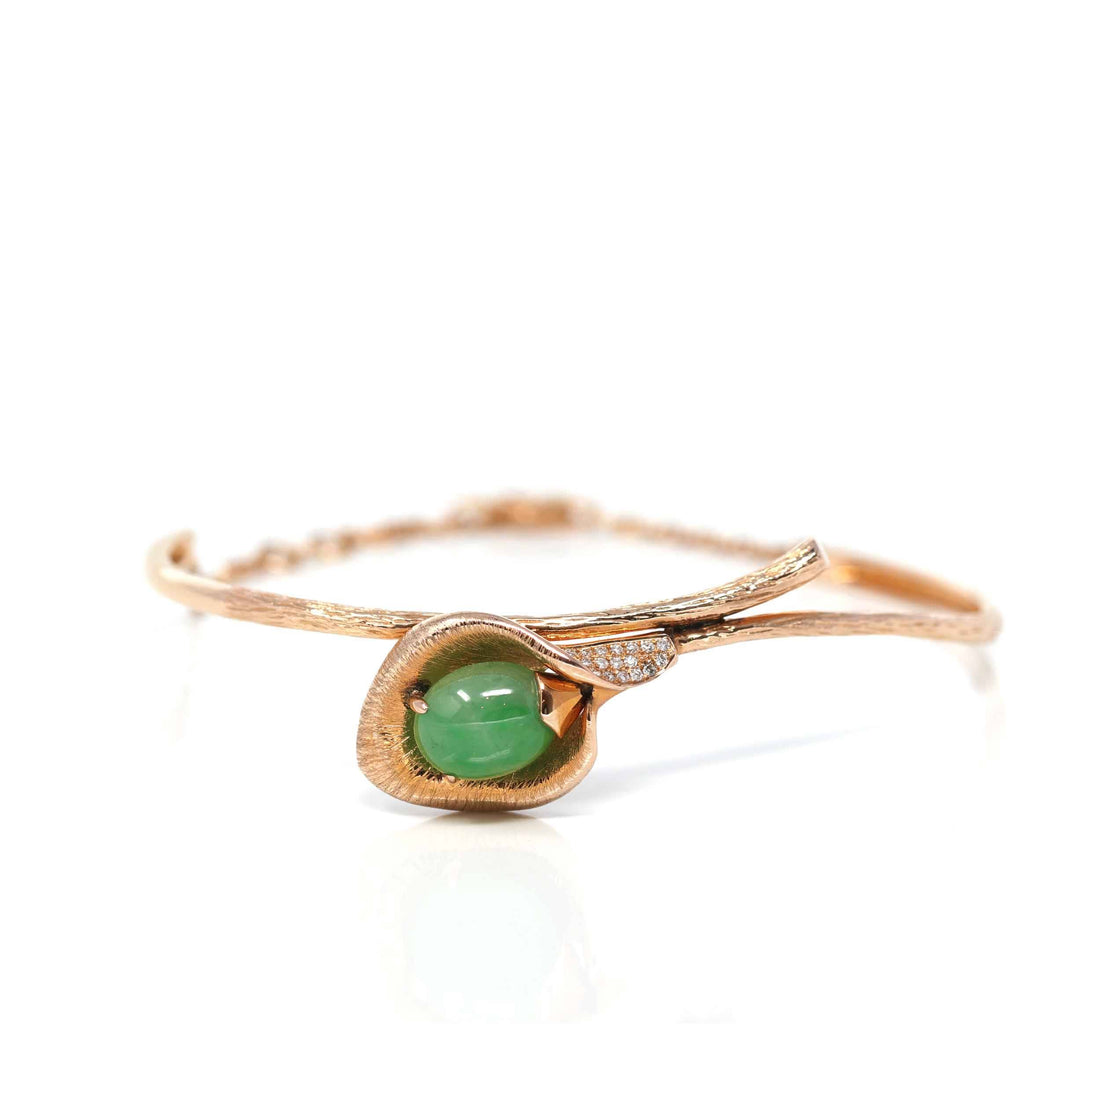 Baikalla Jewelry Gold Jade Bracelet 18k Rose Gold "Morning Glory" Half Bracelet Bangle with Green Imperial Jade & Diamonds